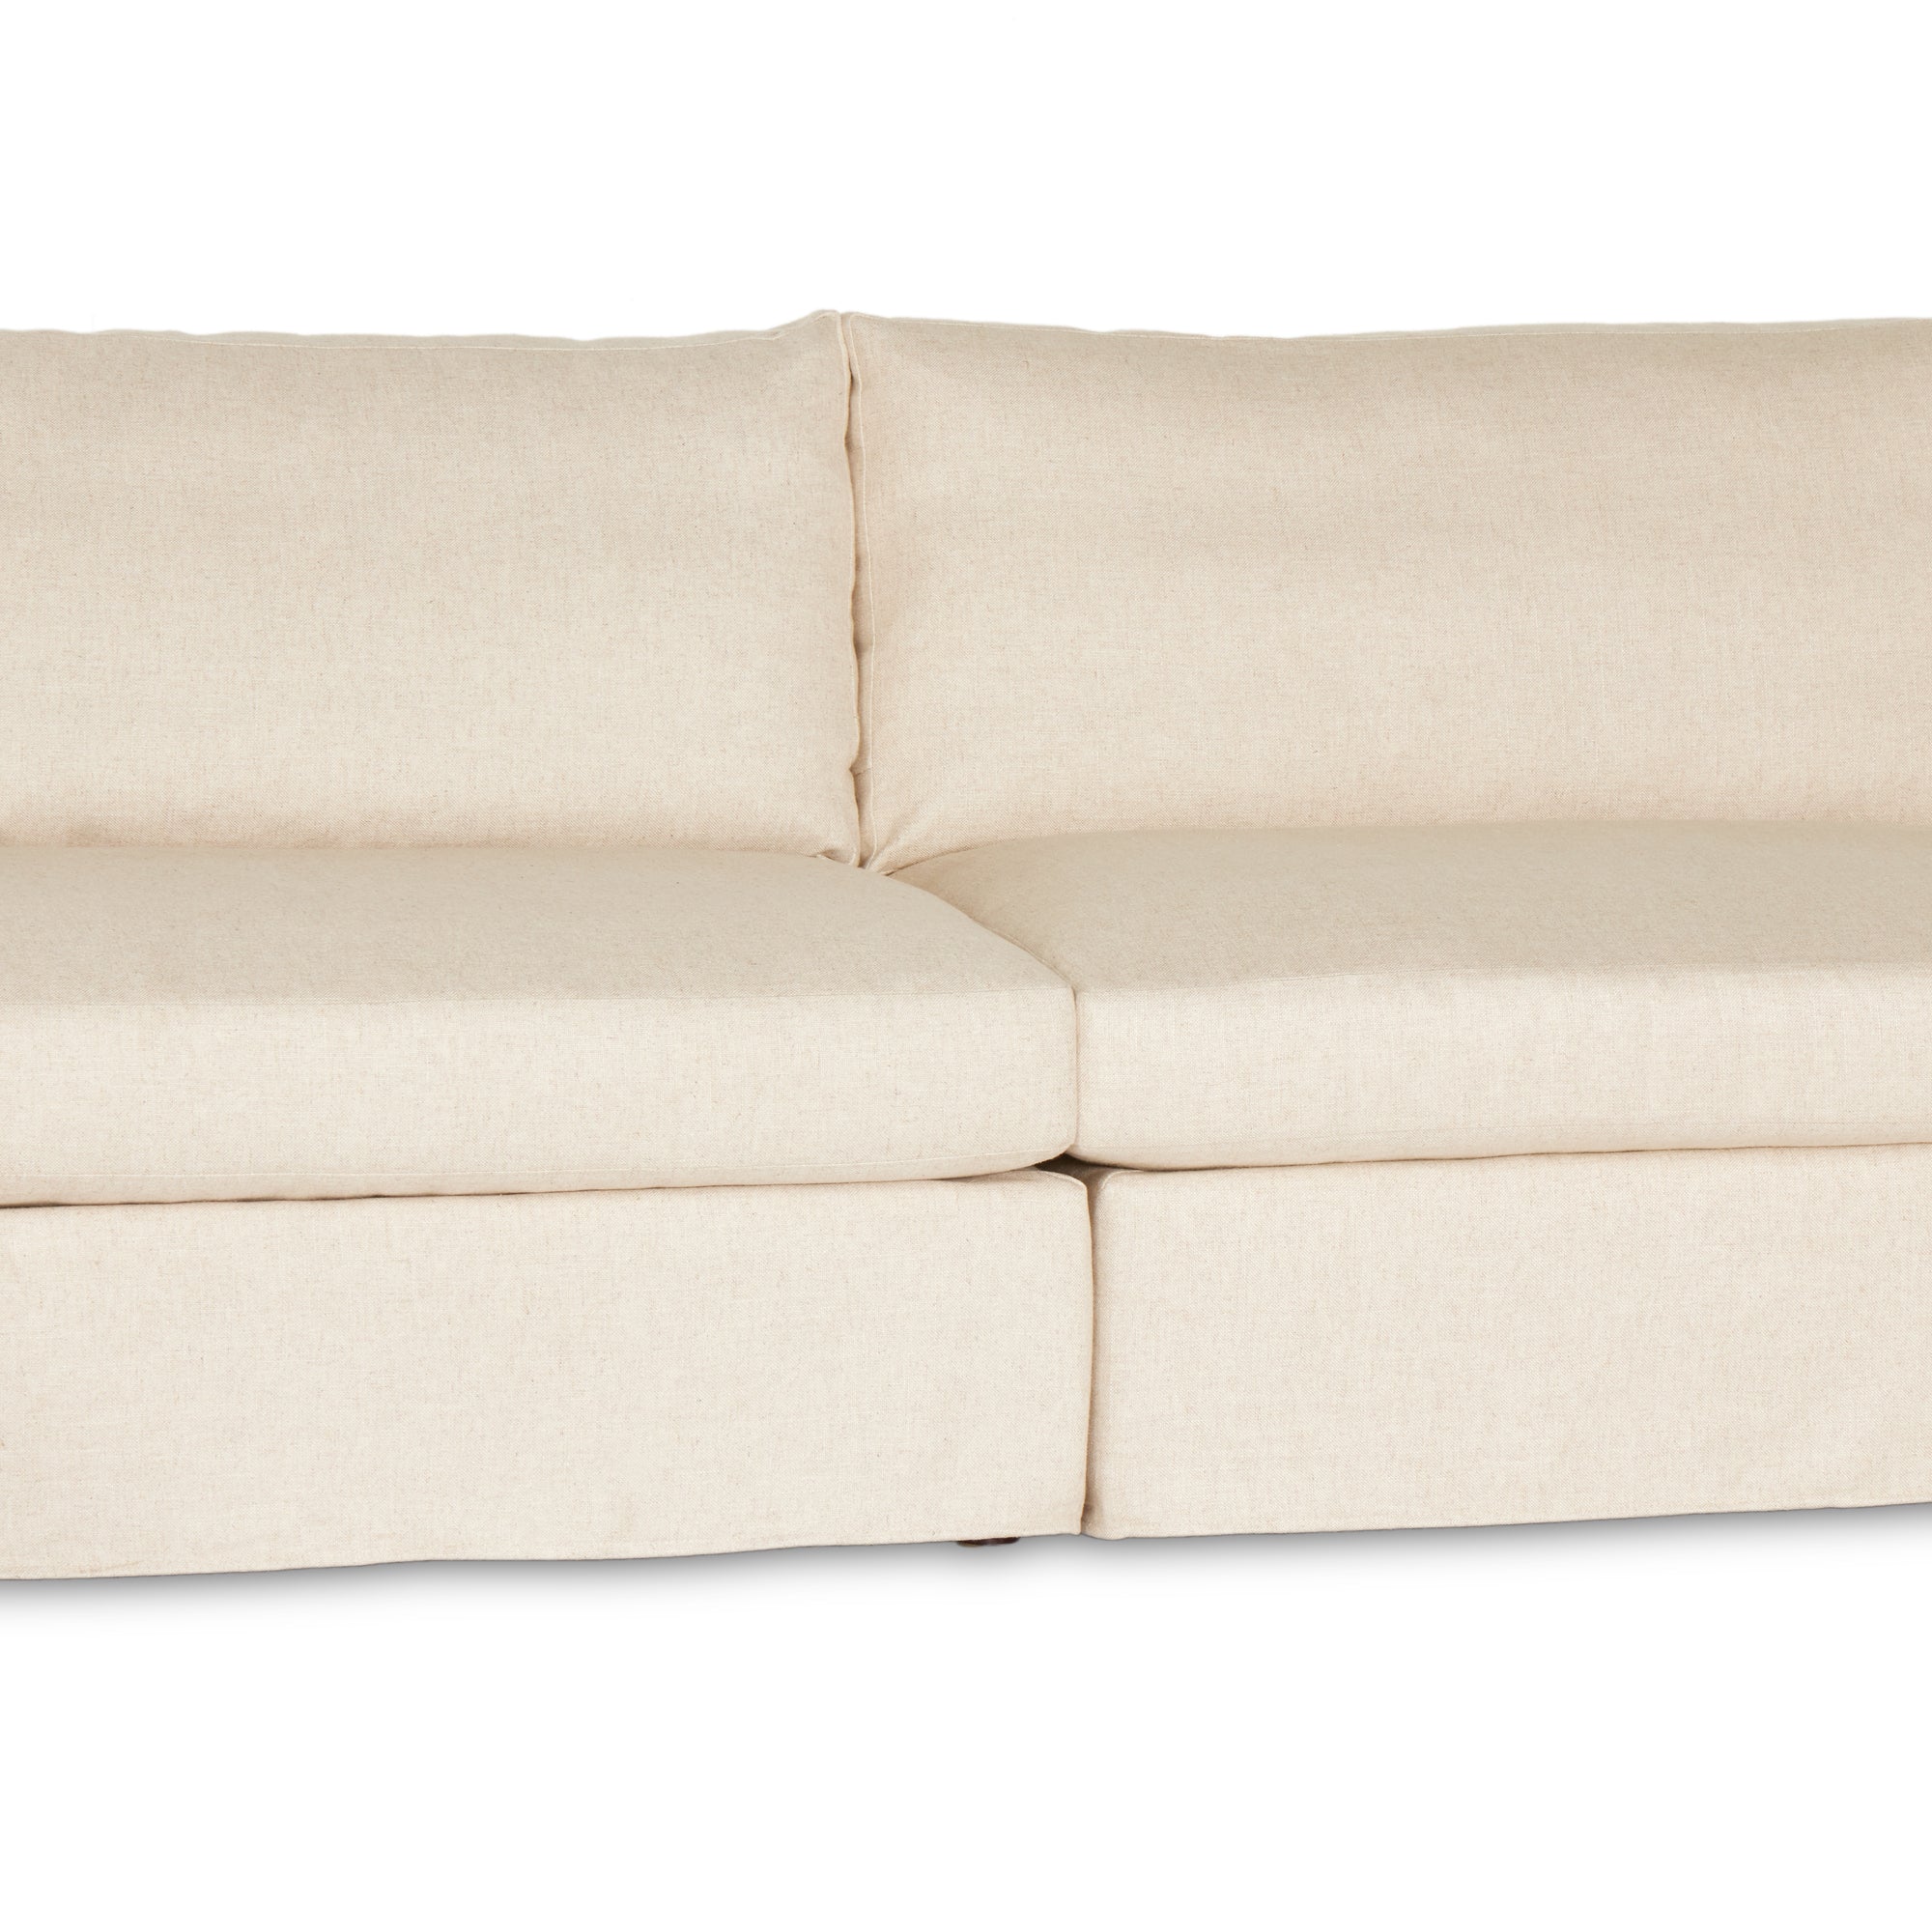 Delray 8pc Slipcover Sofa Sectional